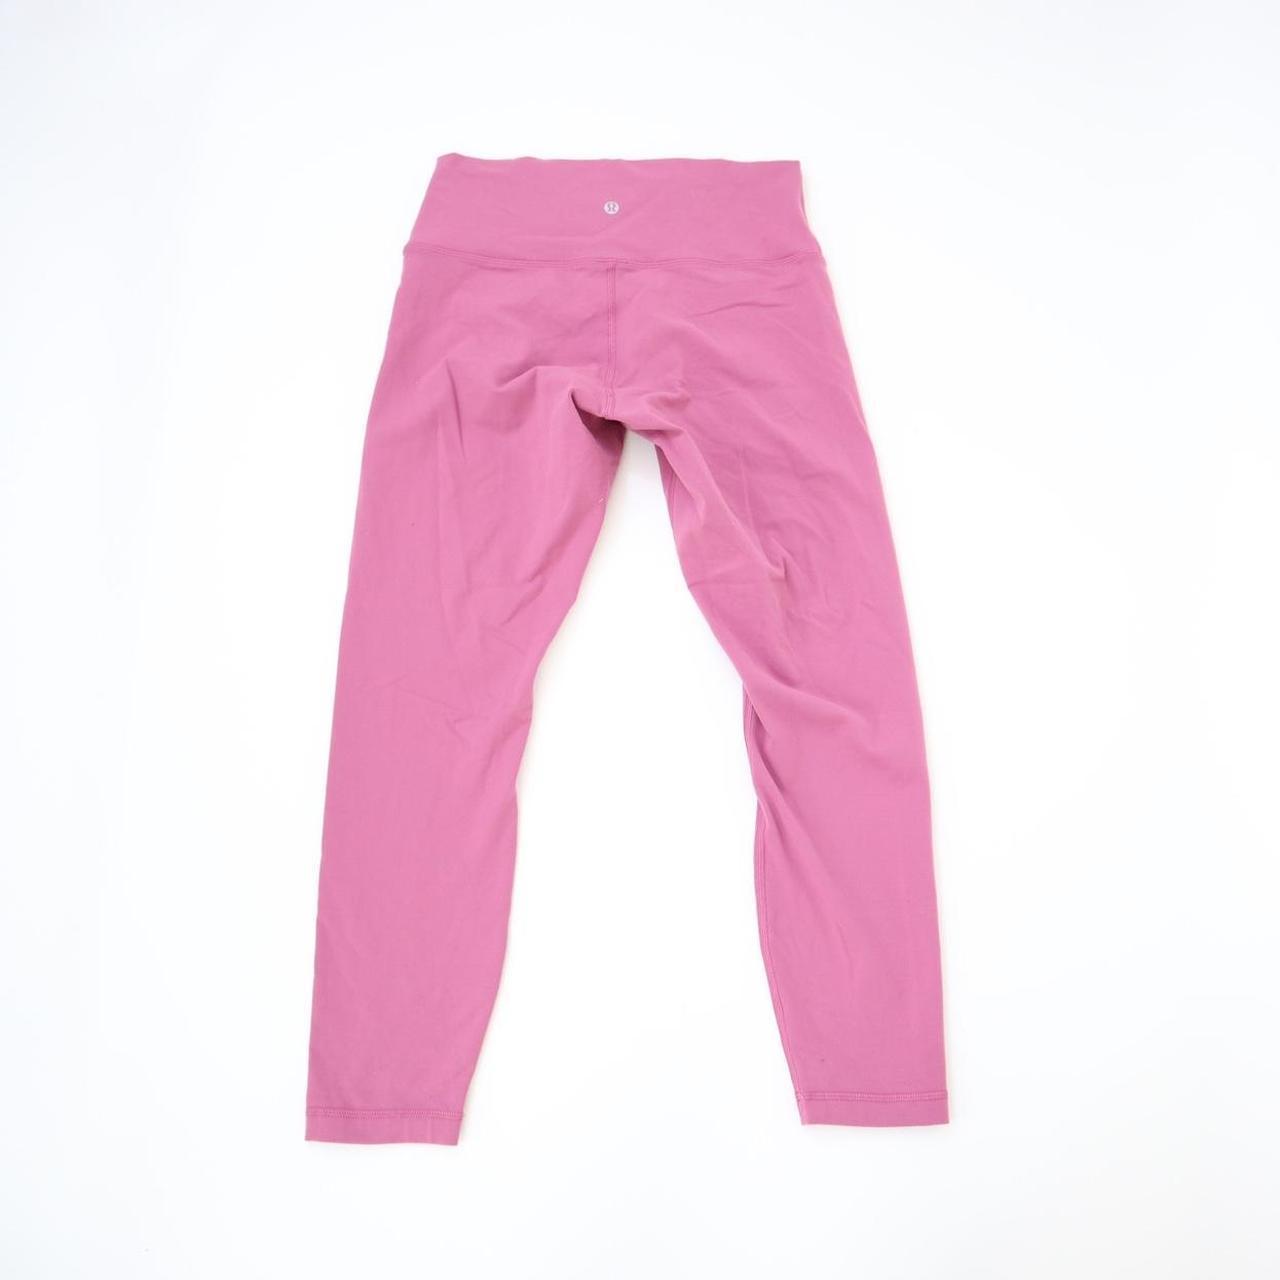 Product Image 2 - Pink lululemon leggings
Cute pink SHORT